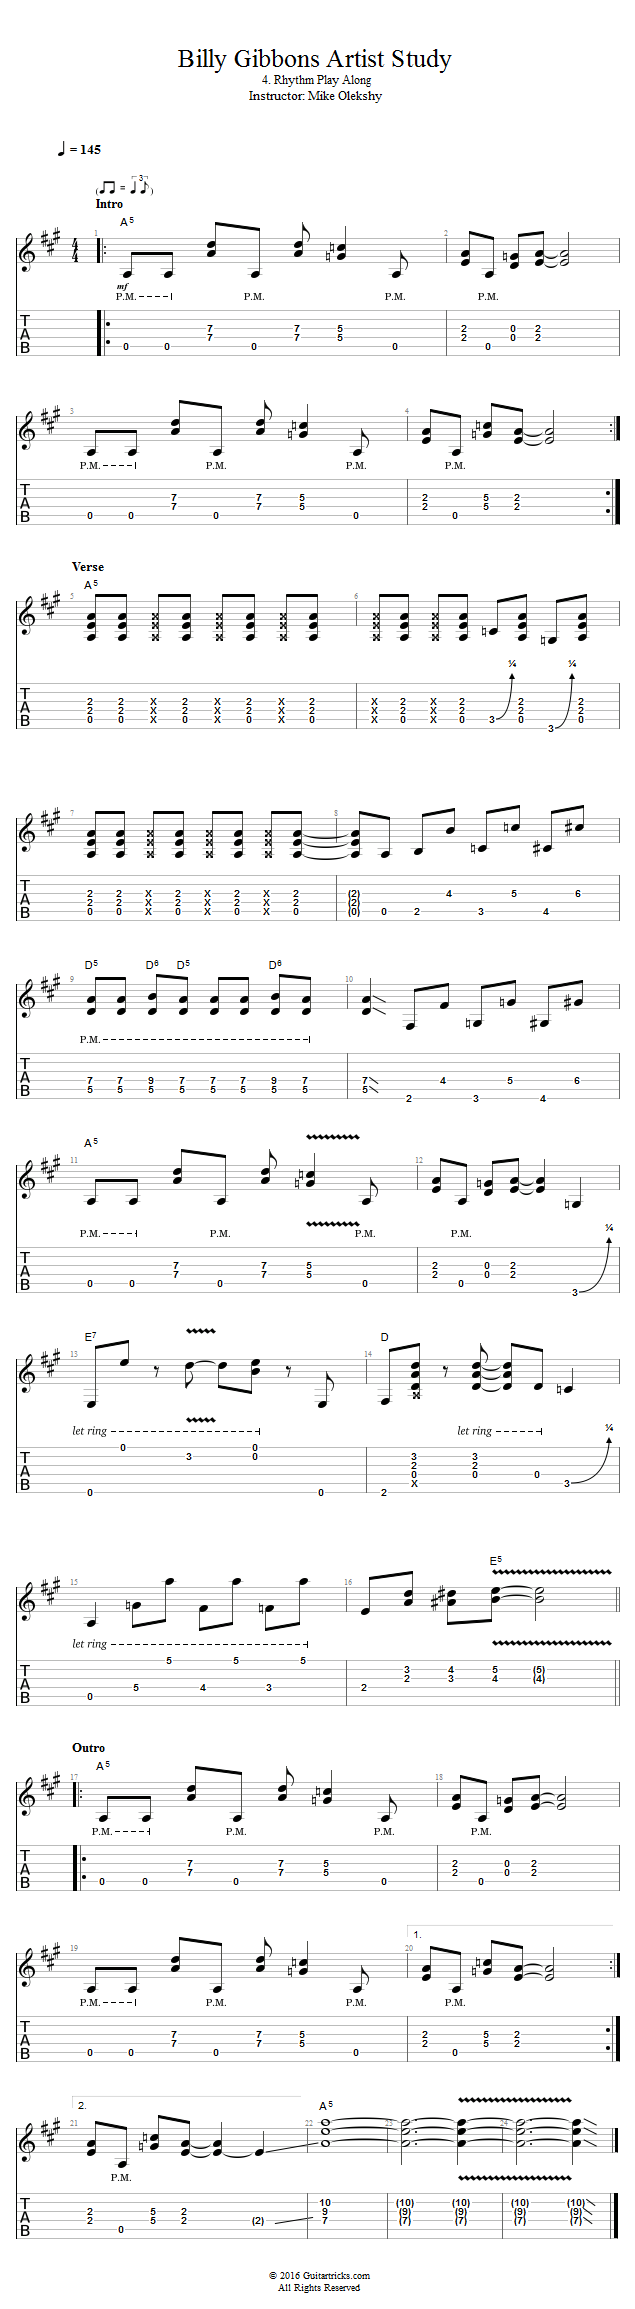 Rhythm Play Along song notation